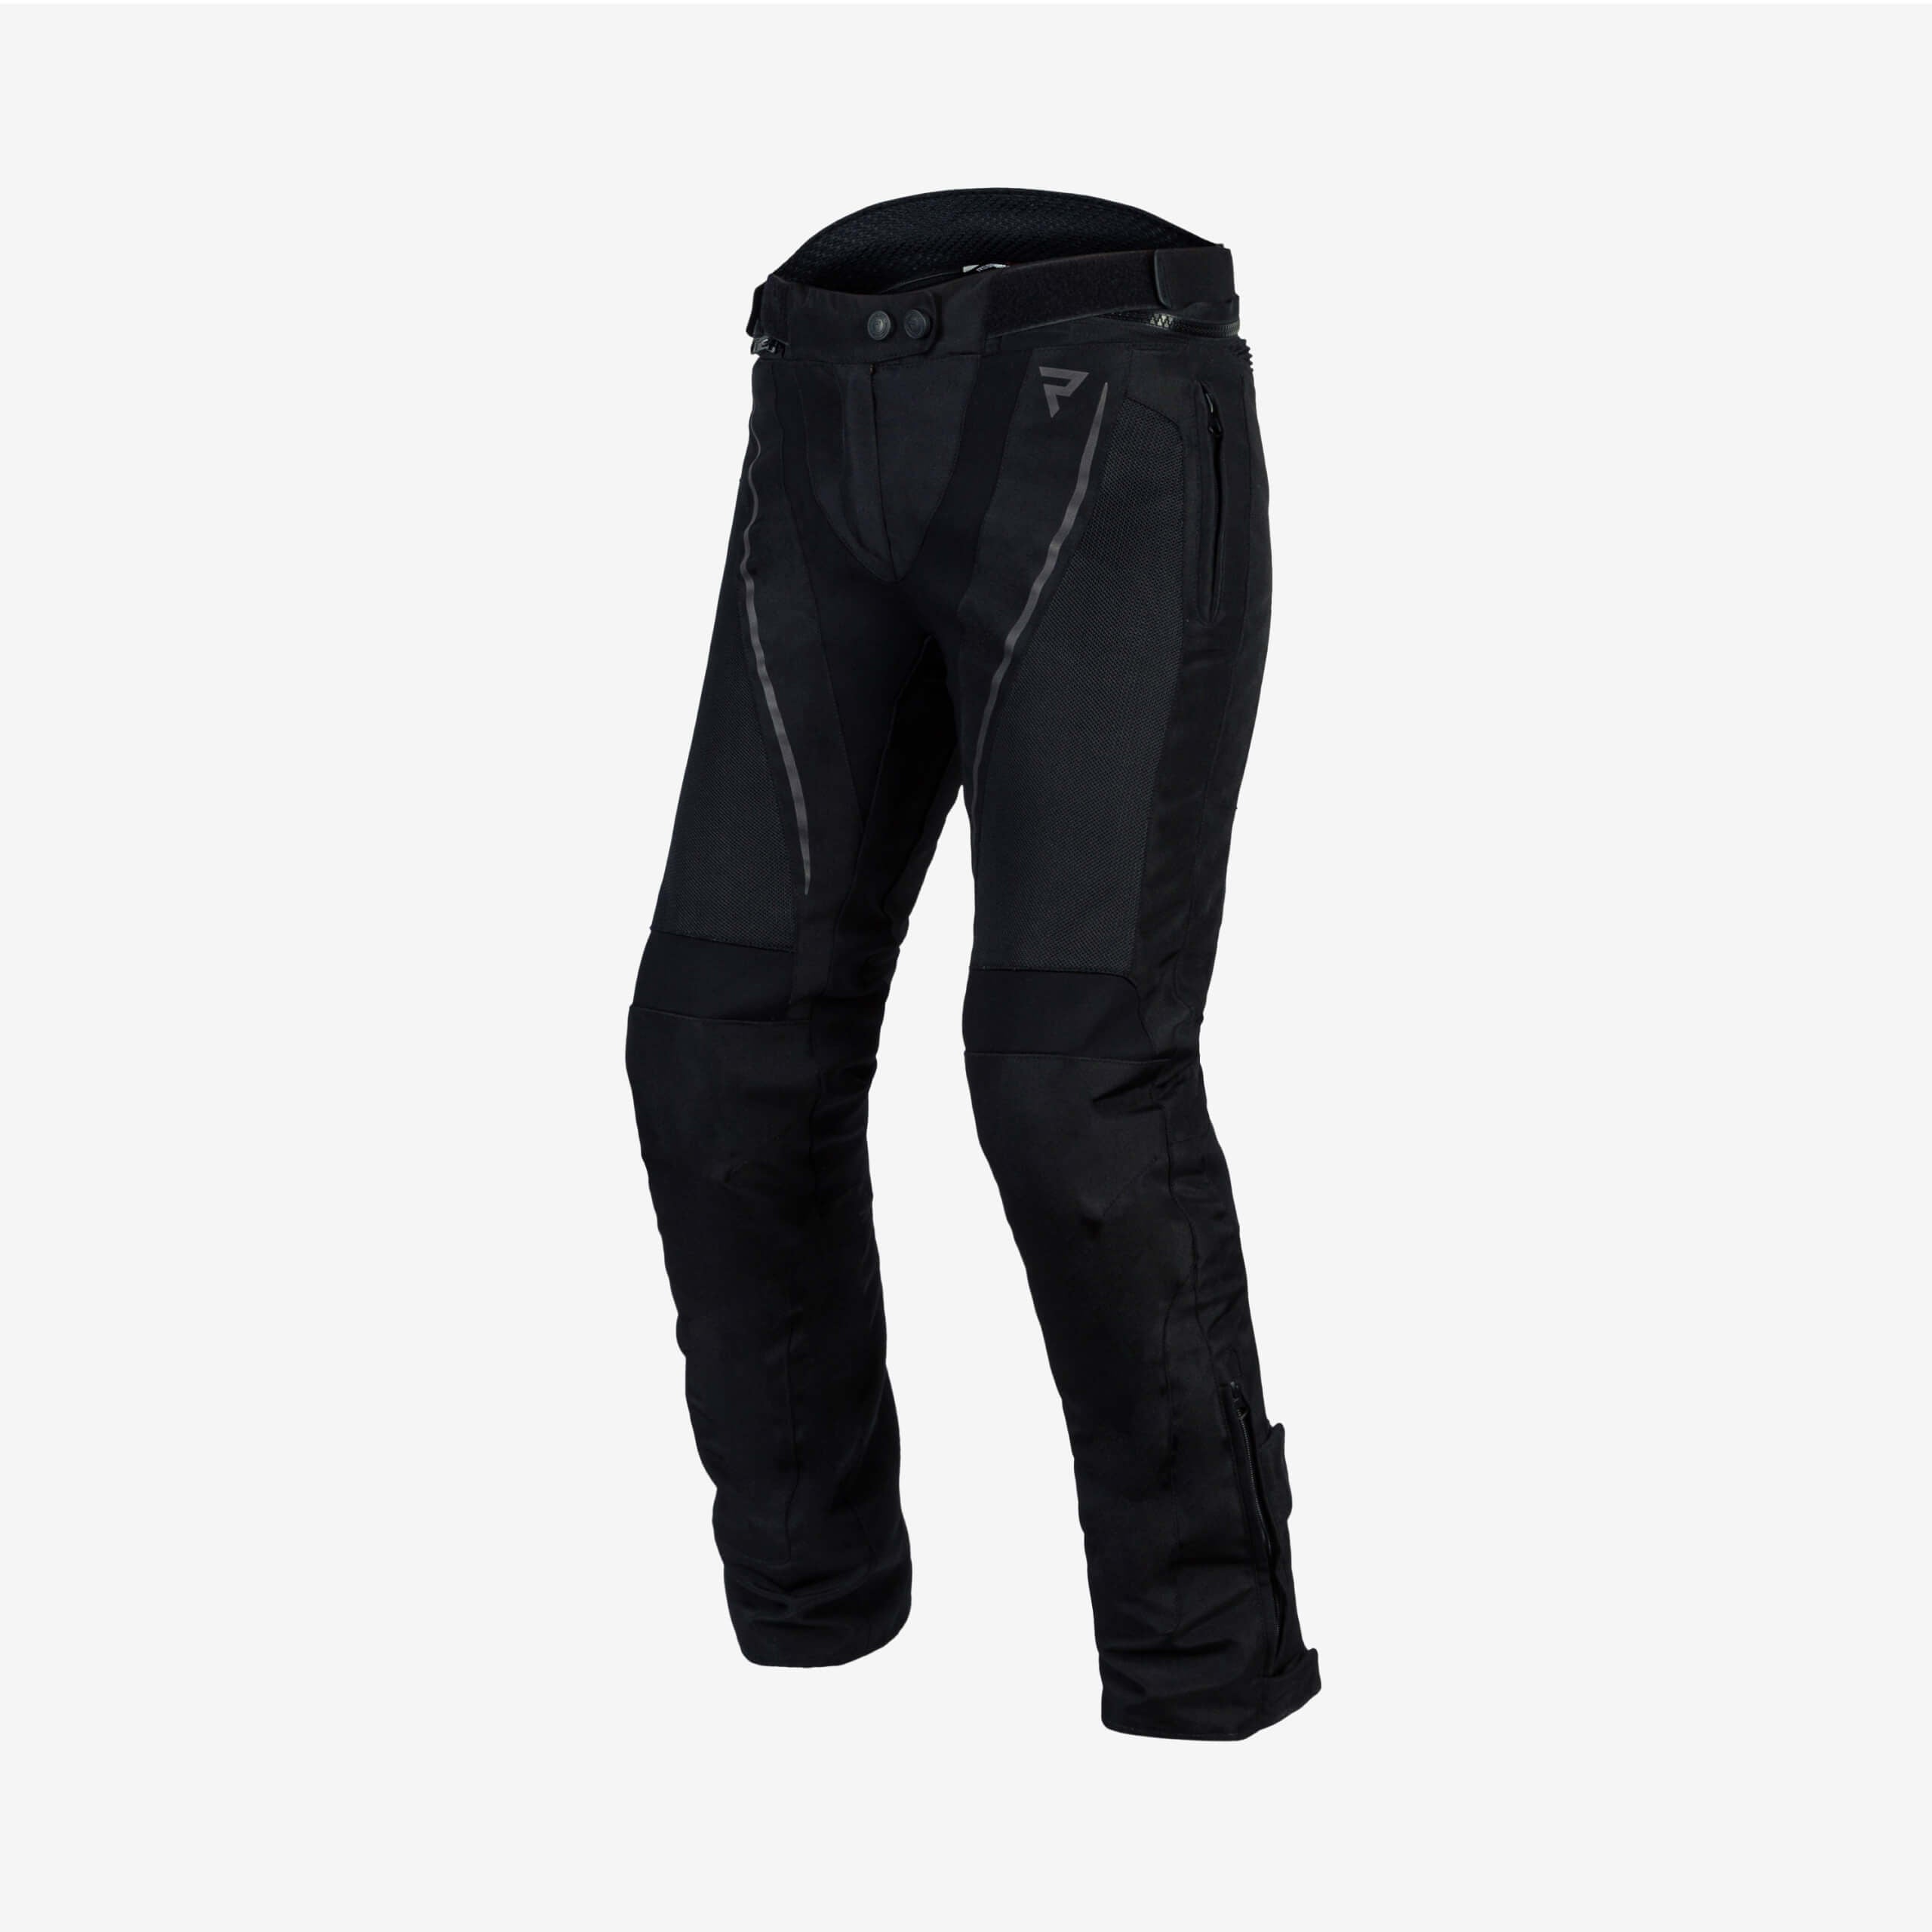 Black Pathfinder Motorcycle Pants Textile - CafeRacerWebshop.com